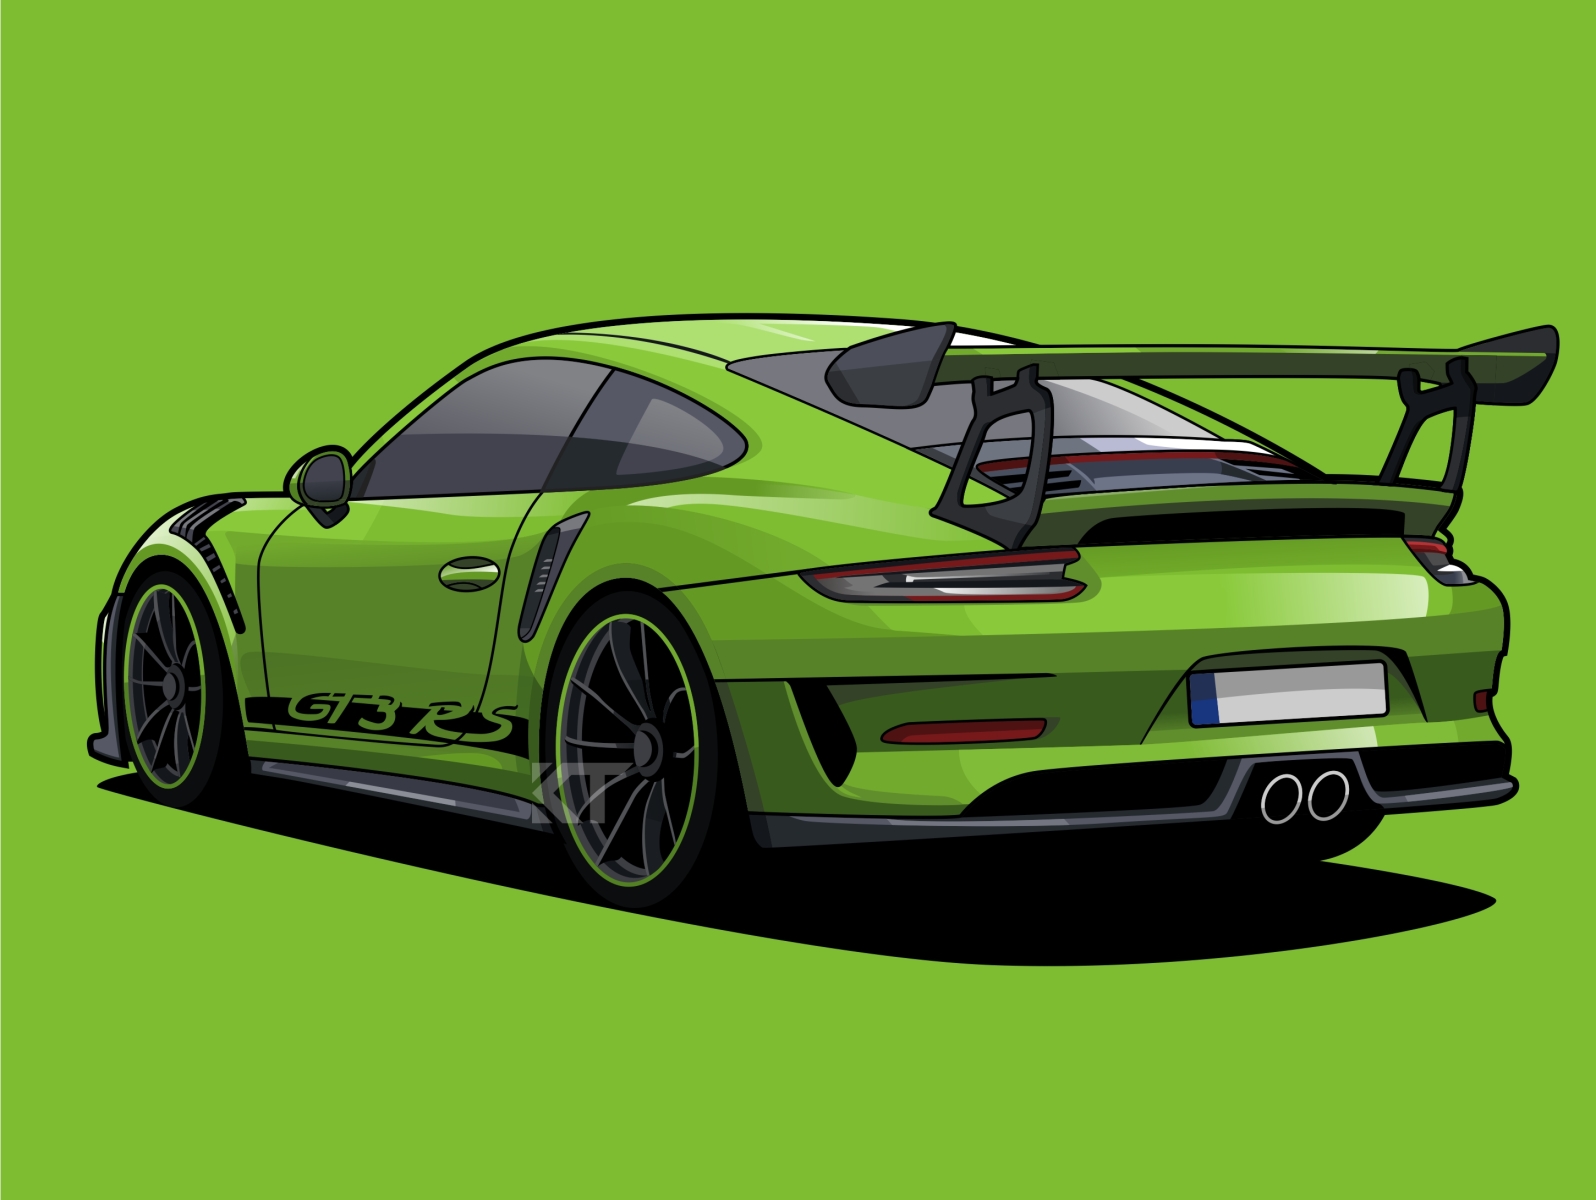 Porsche 911 GT3 RS illustration by kelfatoreiq on Dribbble